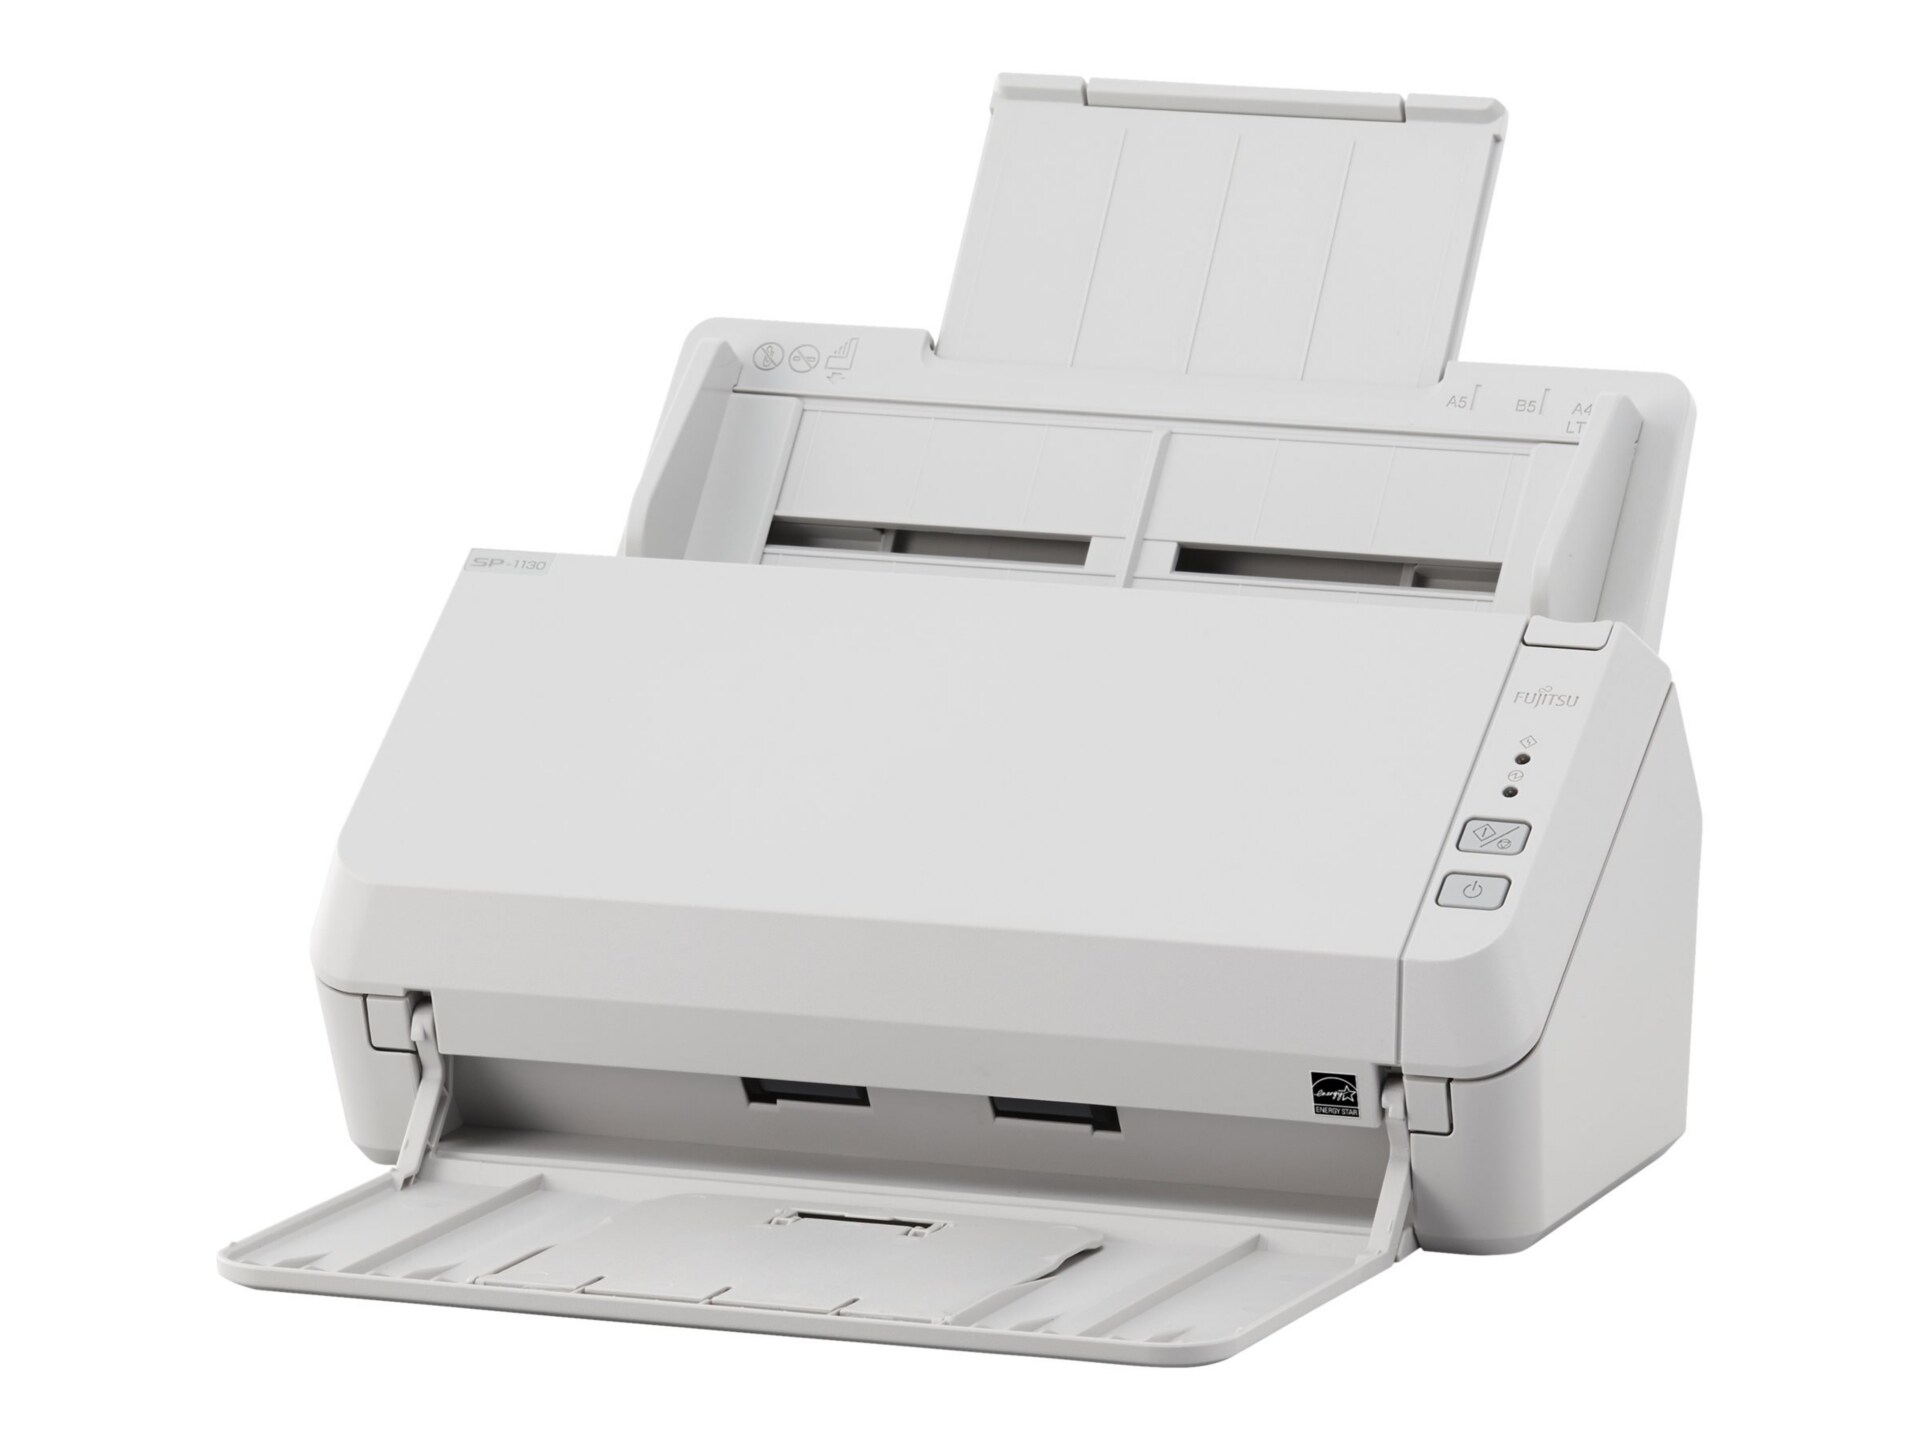 Fujitsu SP-1130 - document scanner - desktop - USB 2.0